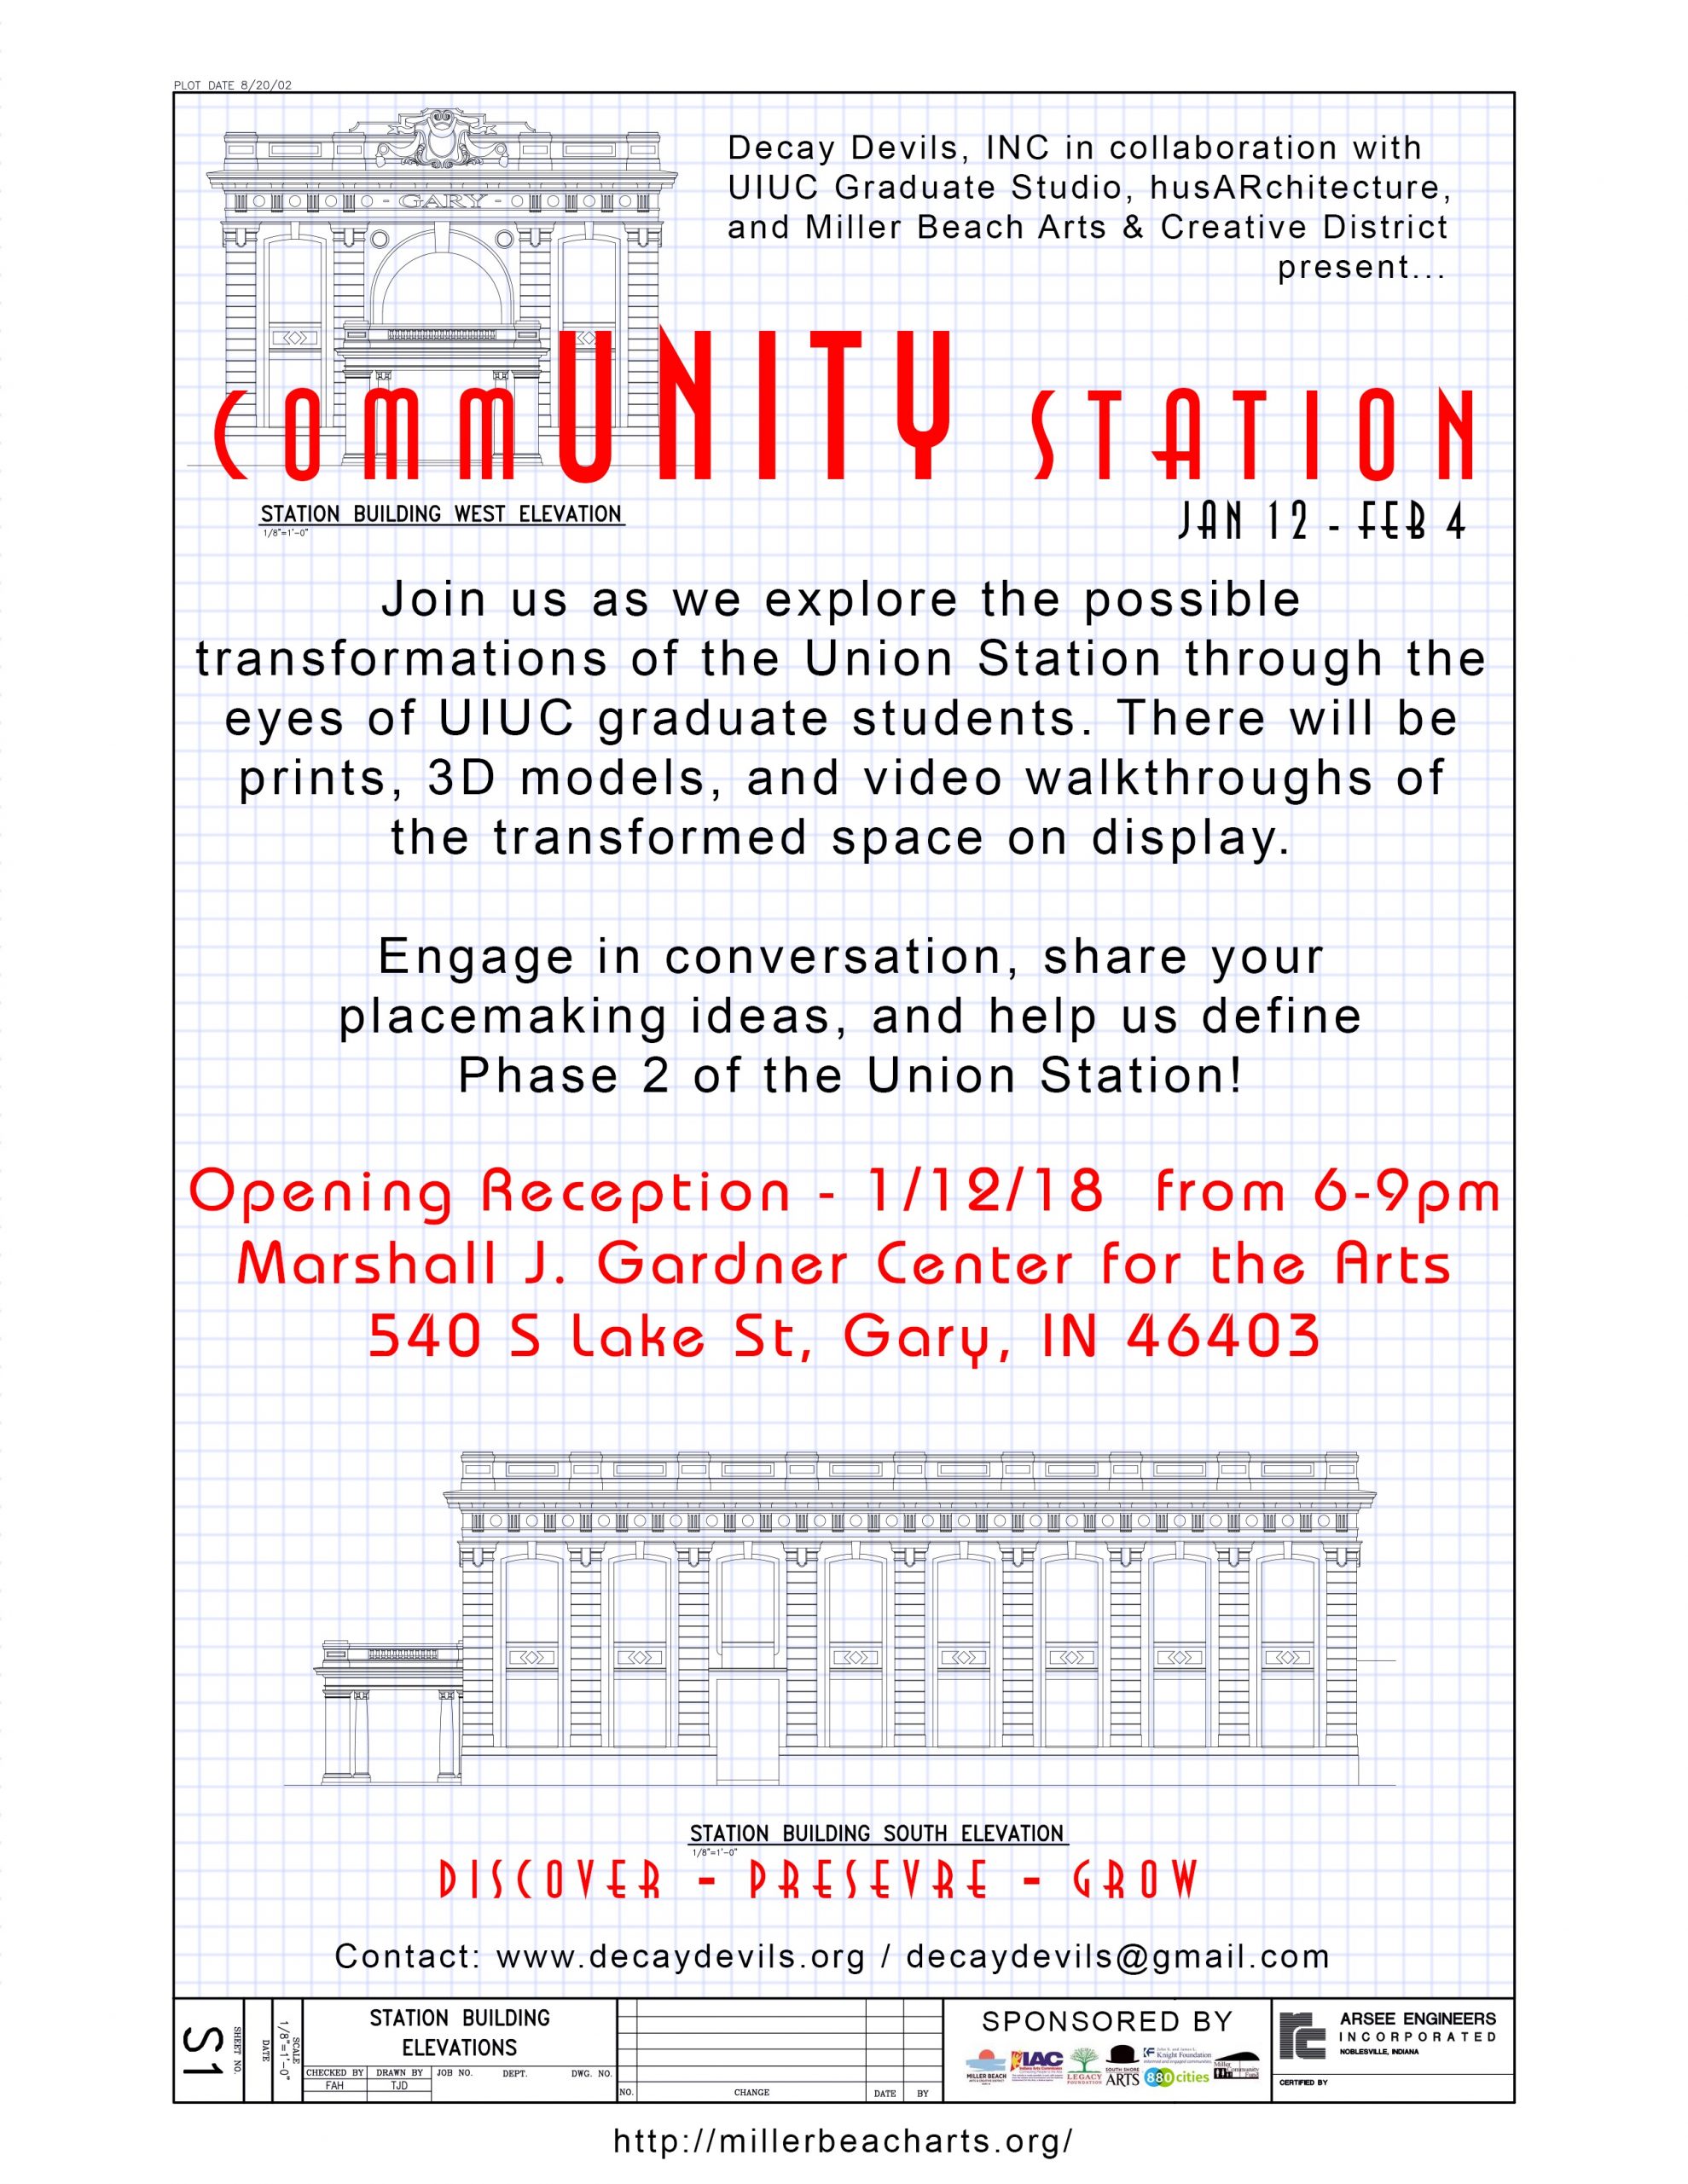 Opening Reception: CommUNITY Station exhibit